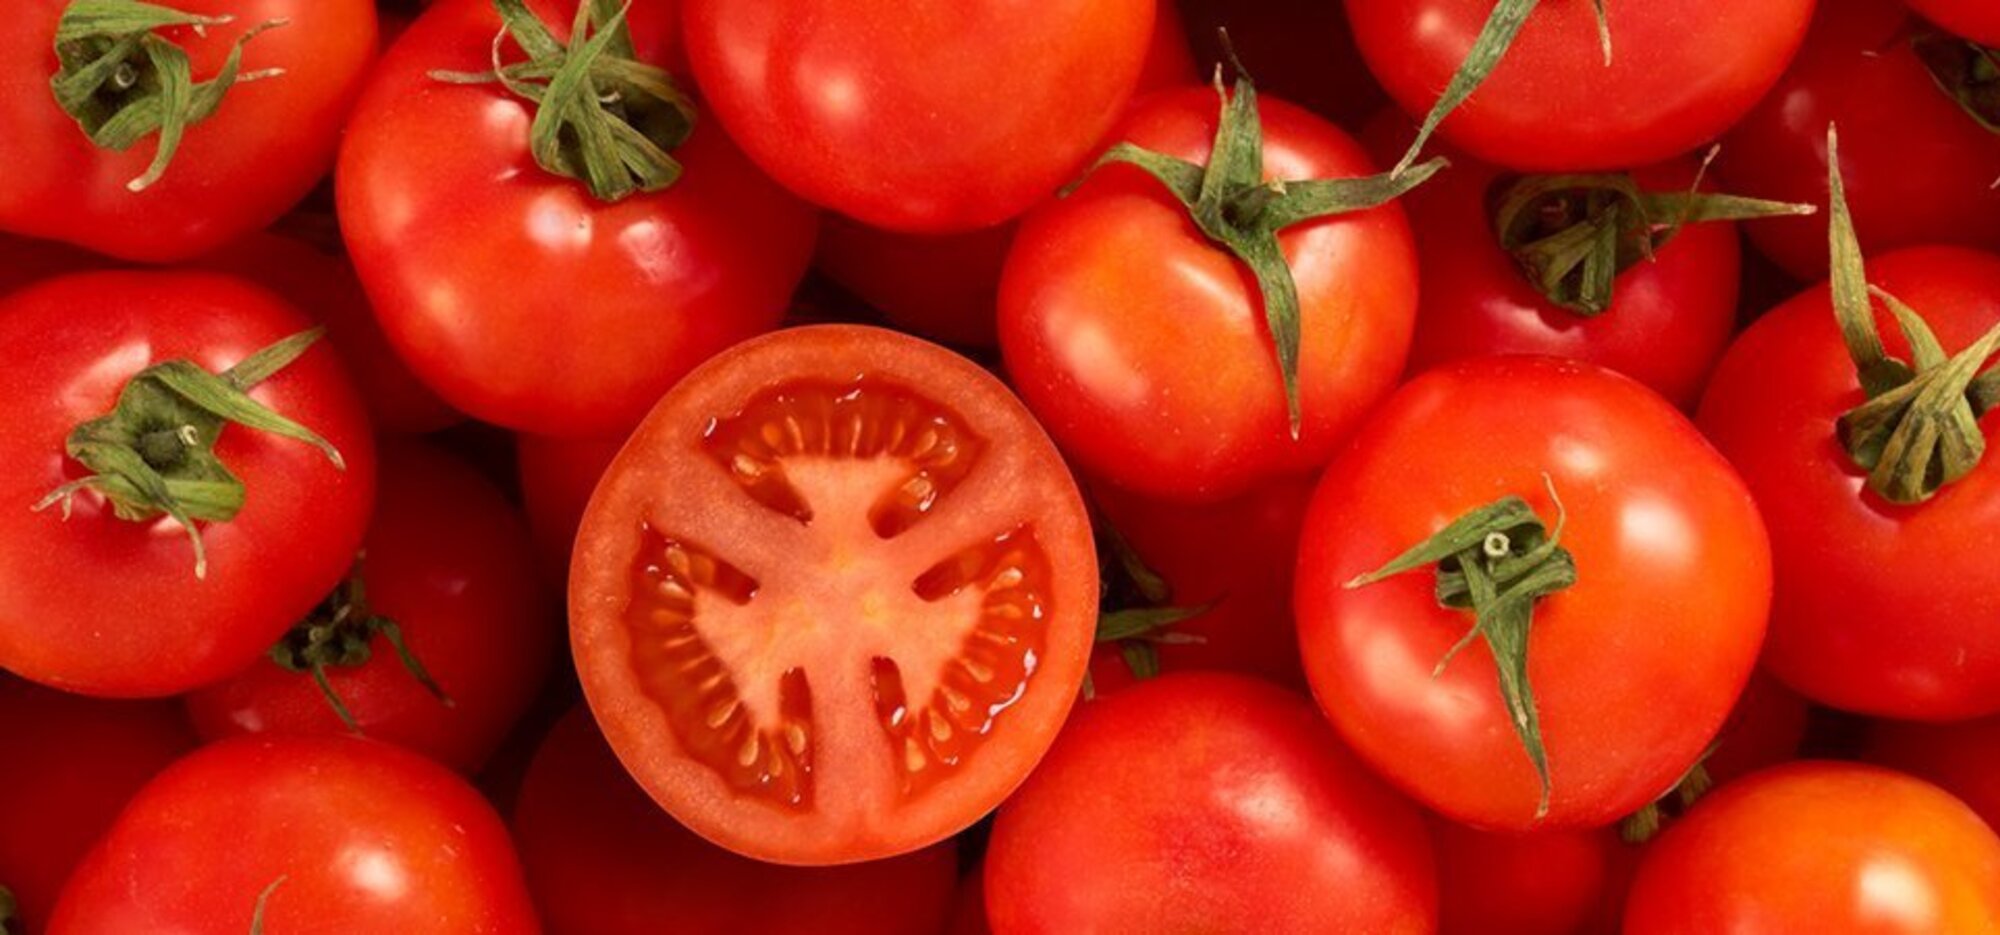 Gemüsesorte:mehrere rote Tomaten